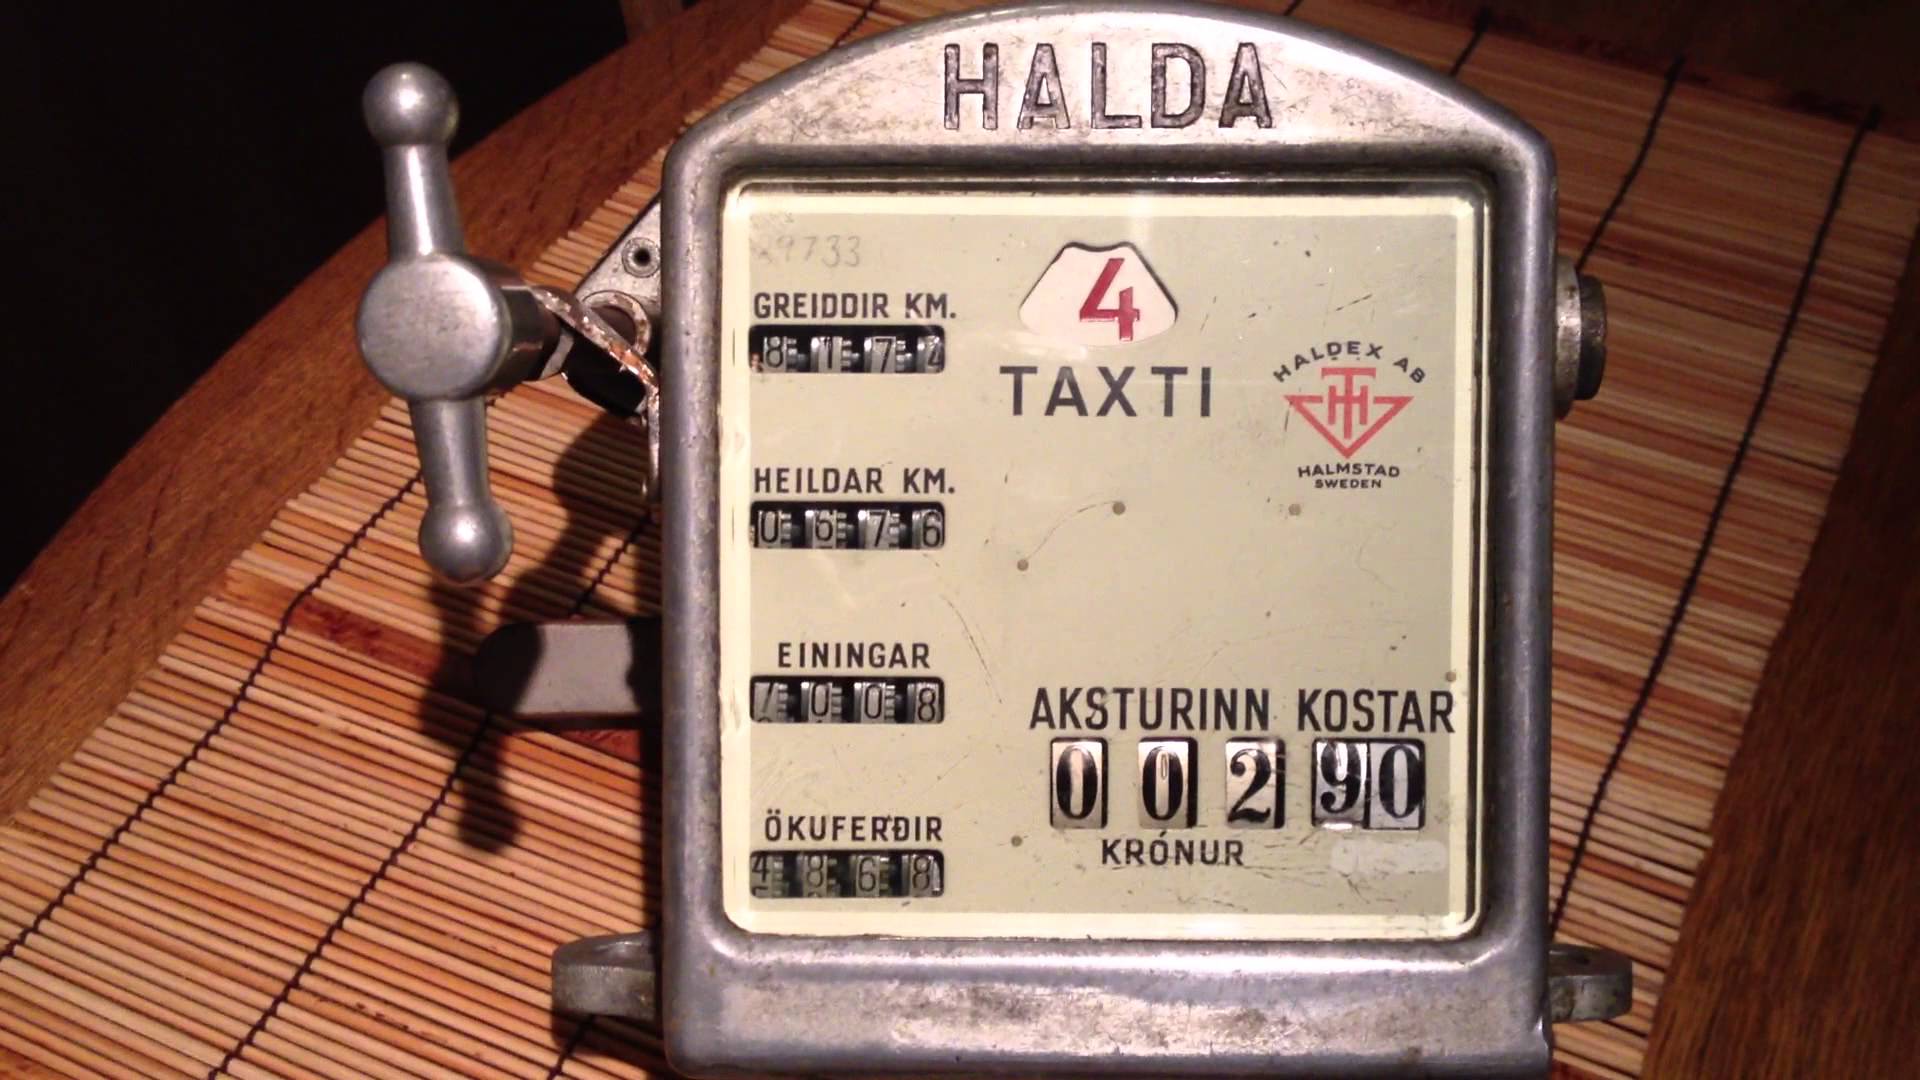 Hilda taxi meter